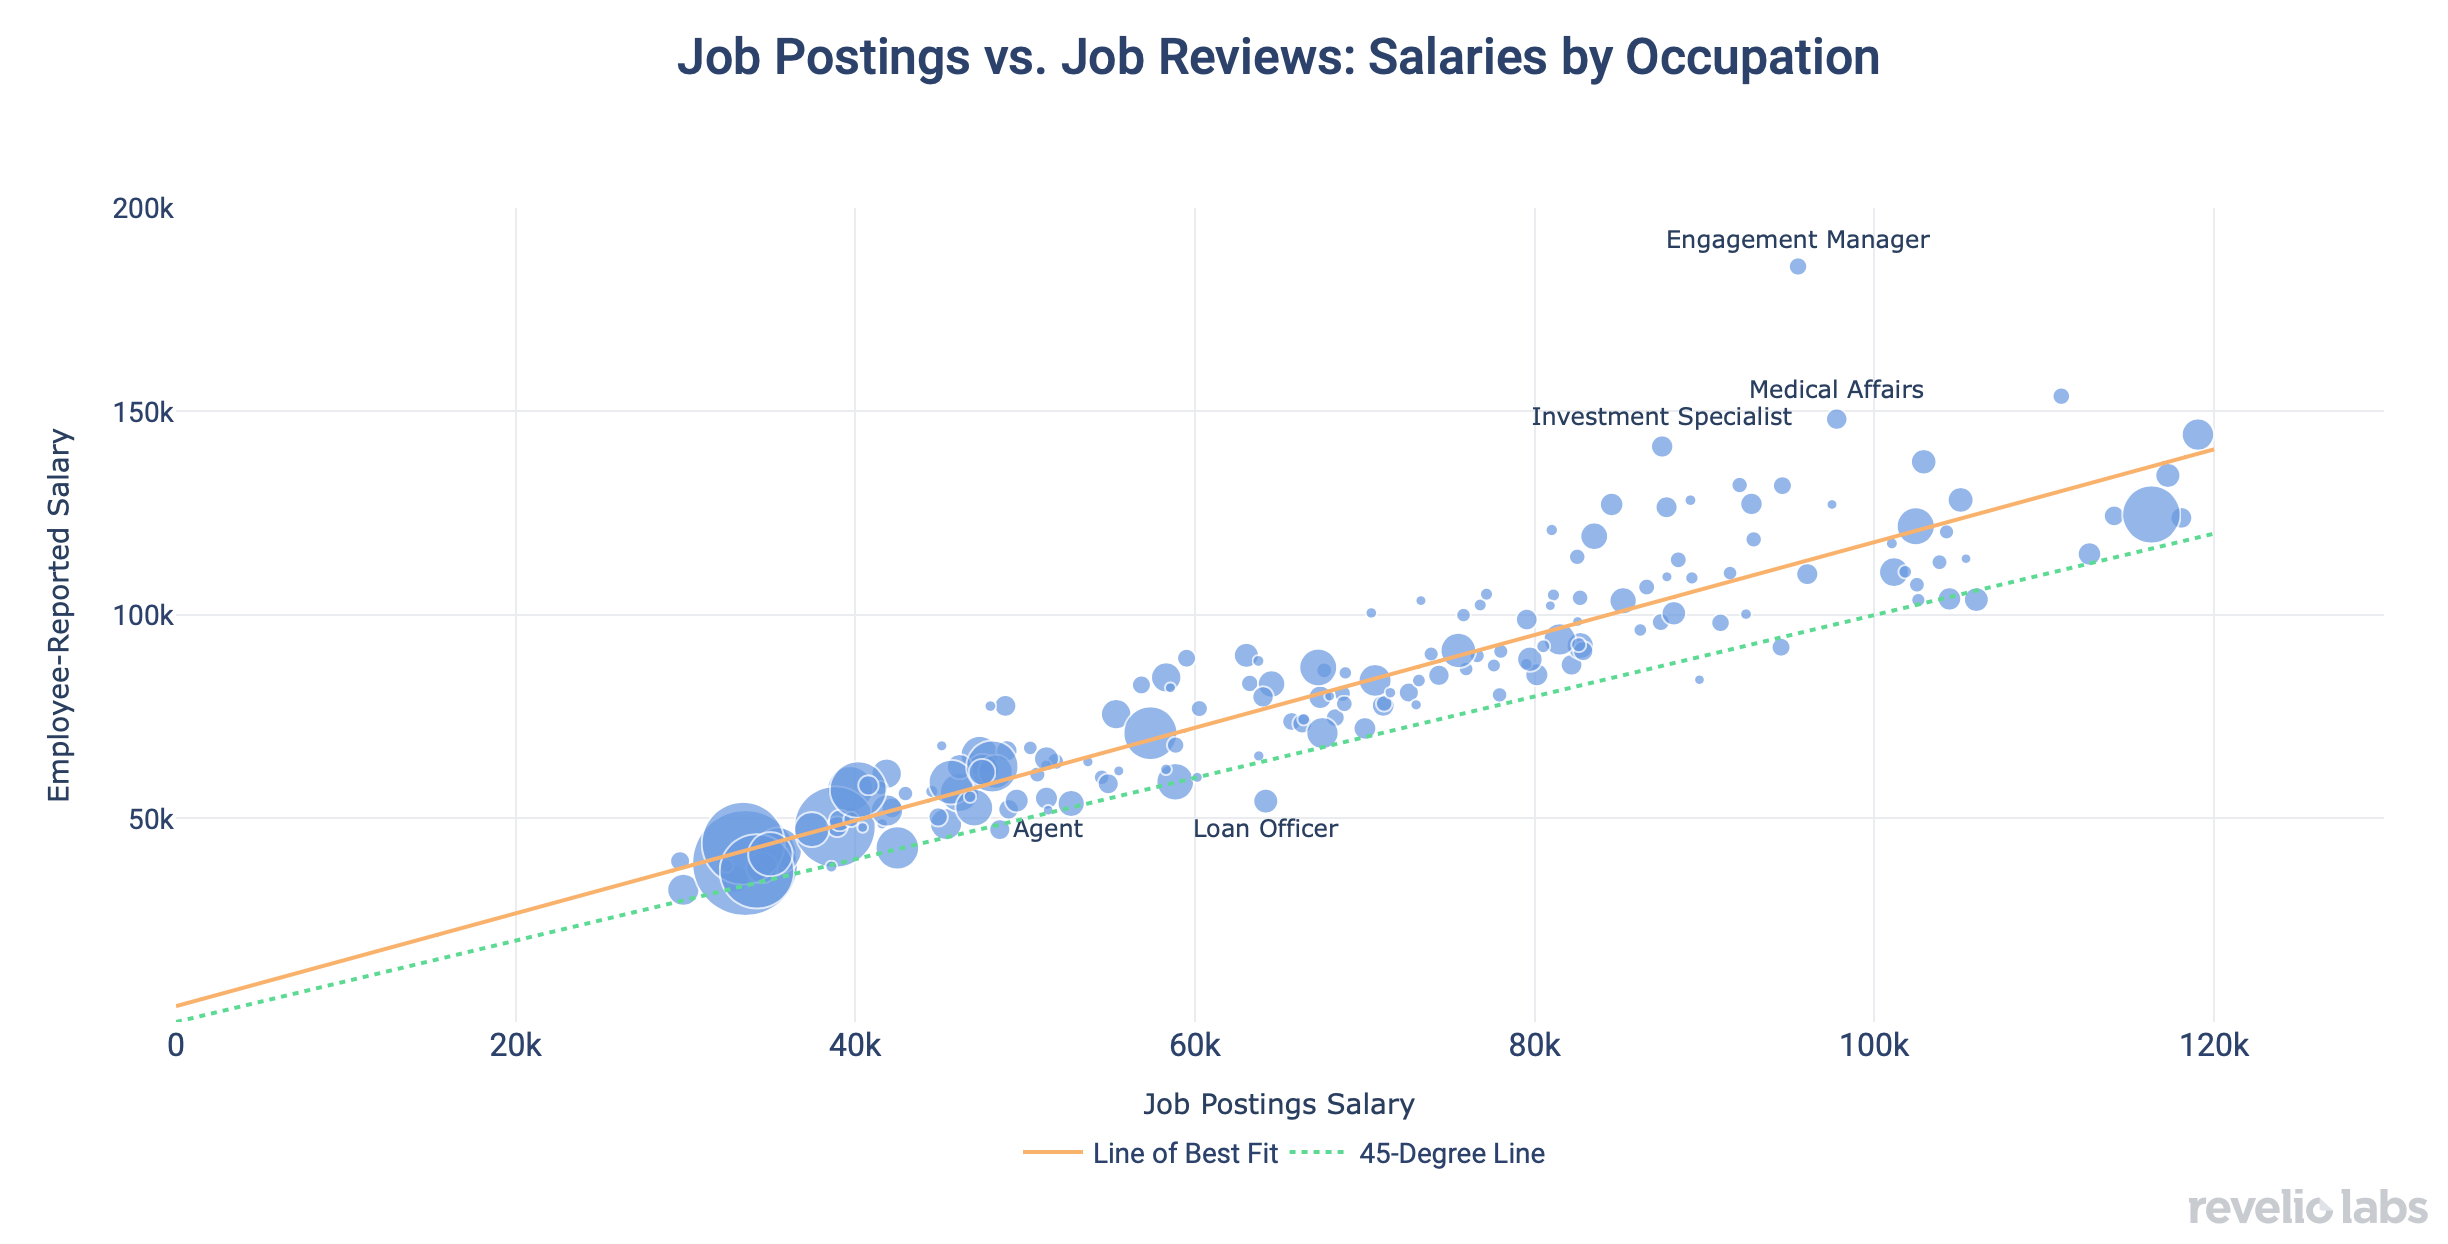 Job Postings Vs. Job Reviews: Salaries By Occupation